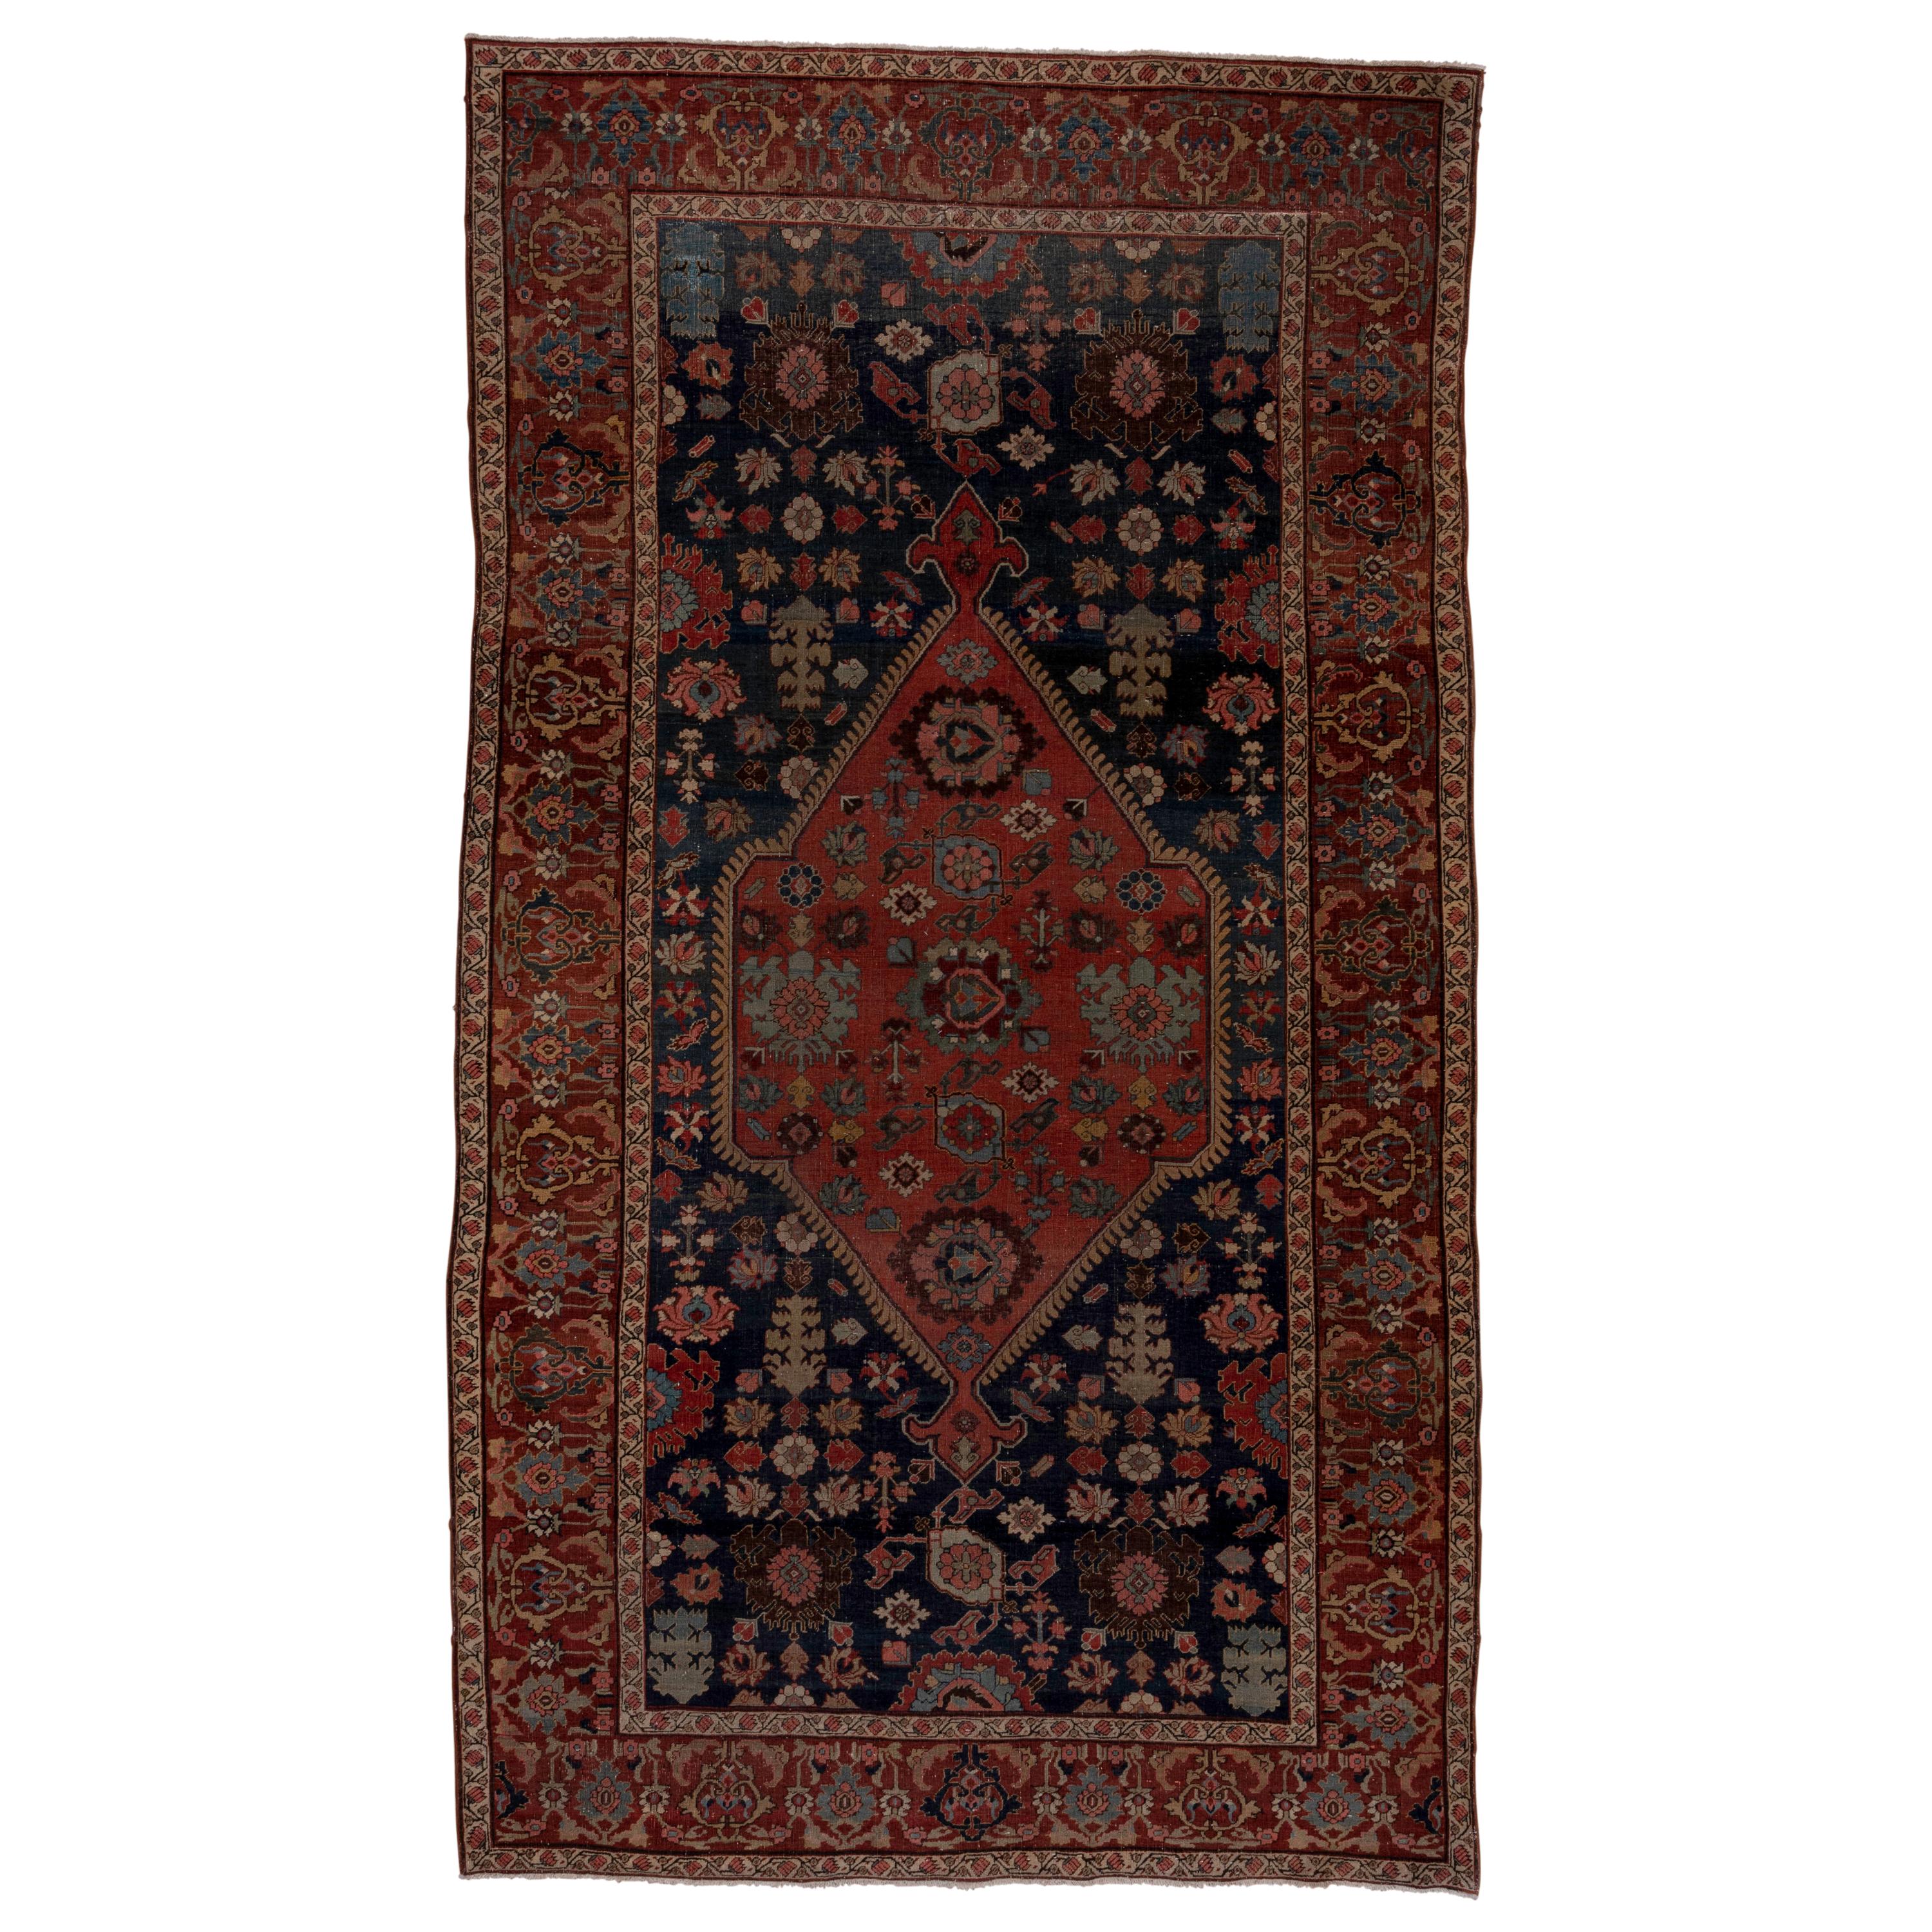 Antique Tribal Persian Bidjar Carpet, Navy Field, 1890s, Stunning Carpet